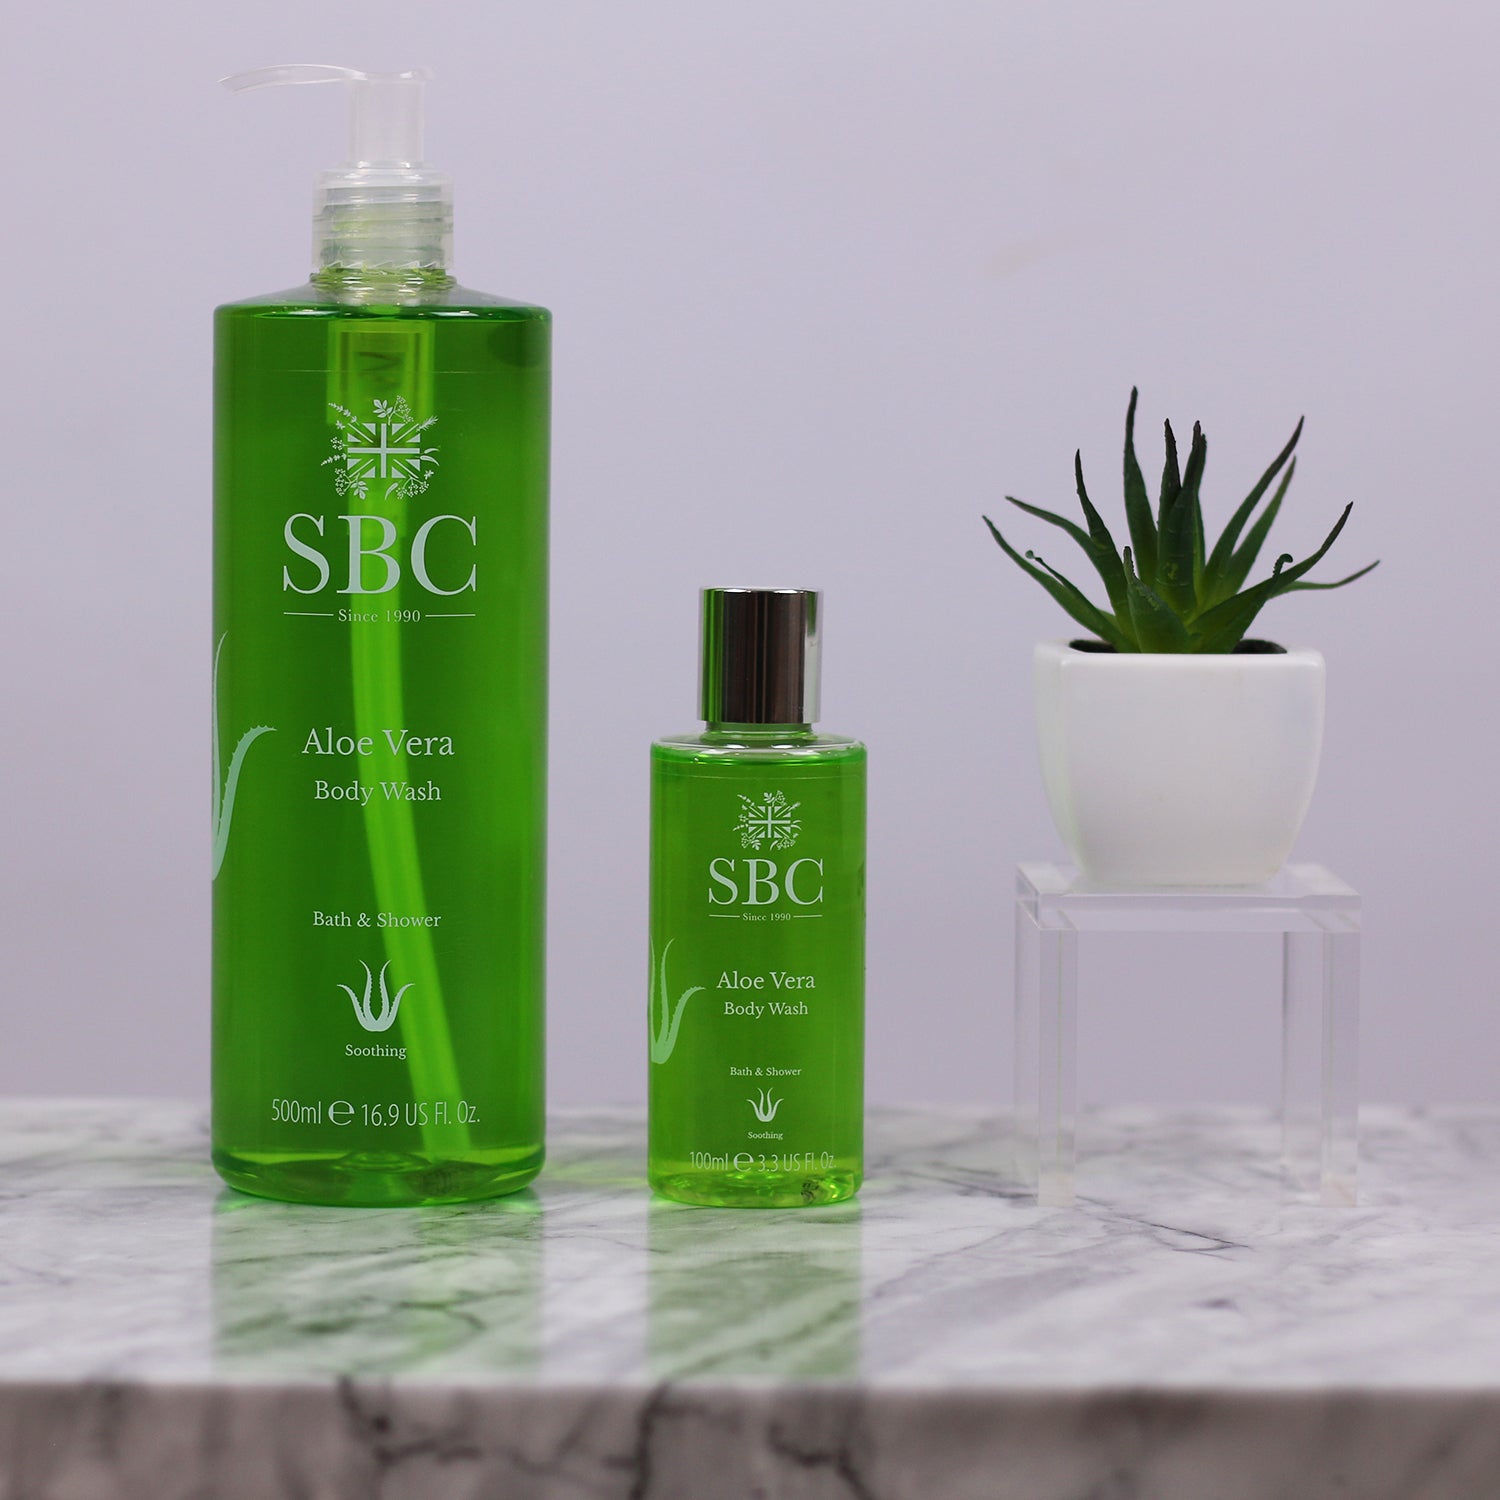 SBC Skincare Aloe Vera Body Wash duo with an Aloe Vera plant